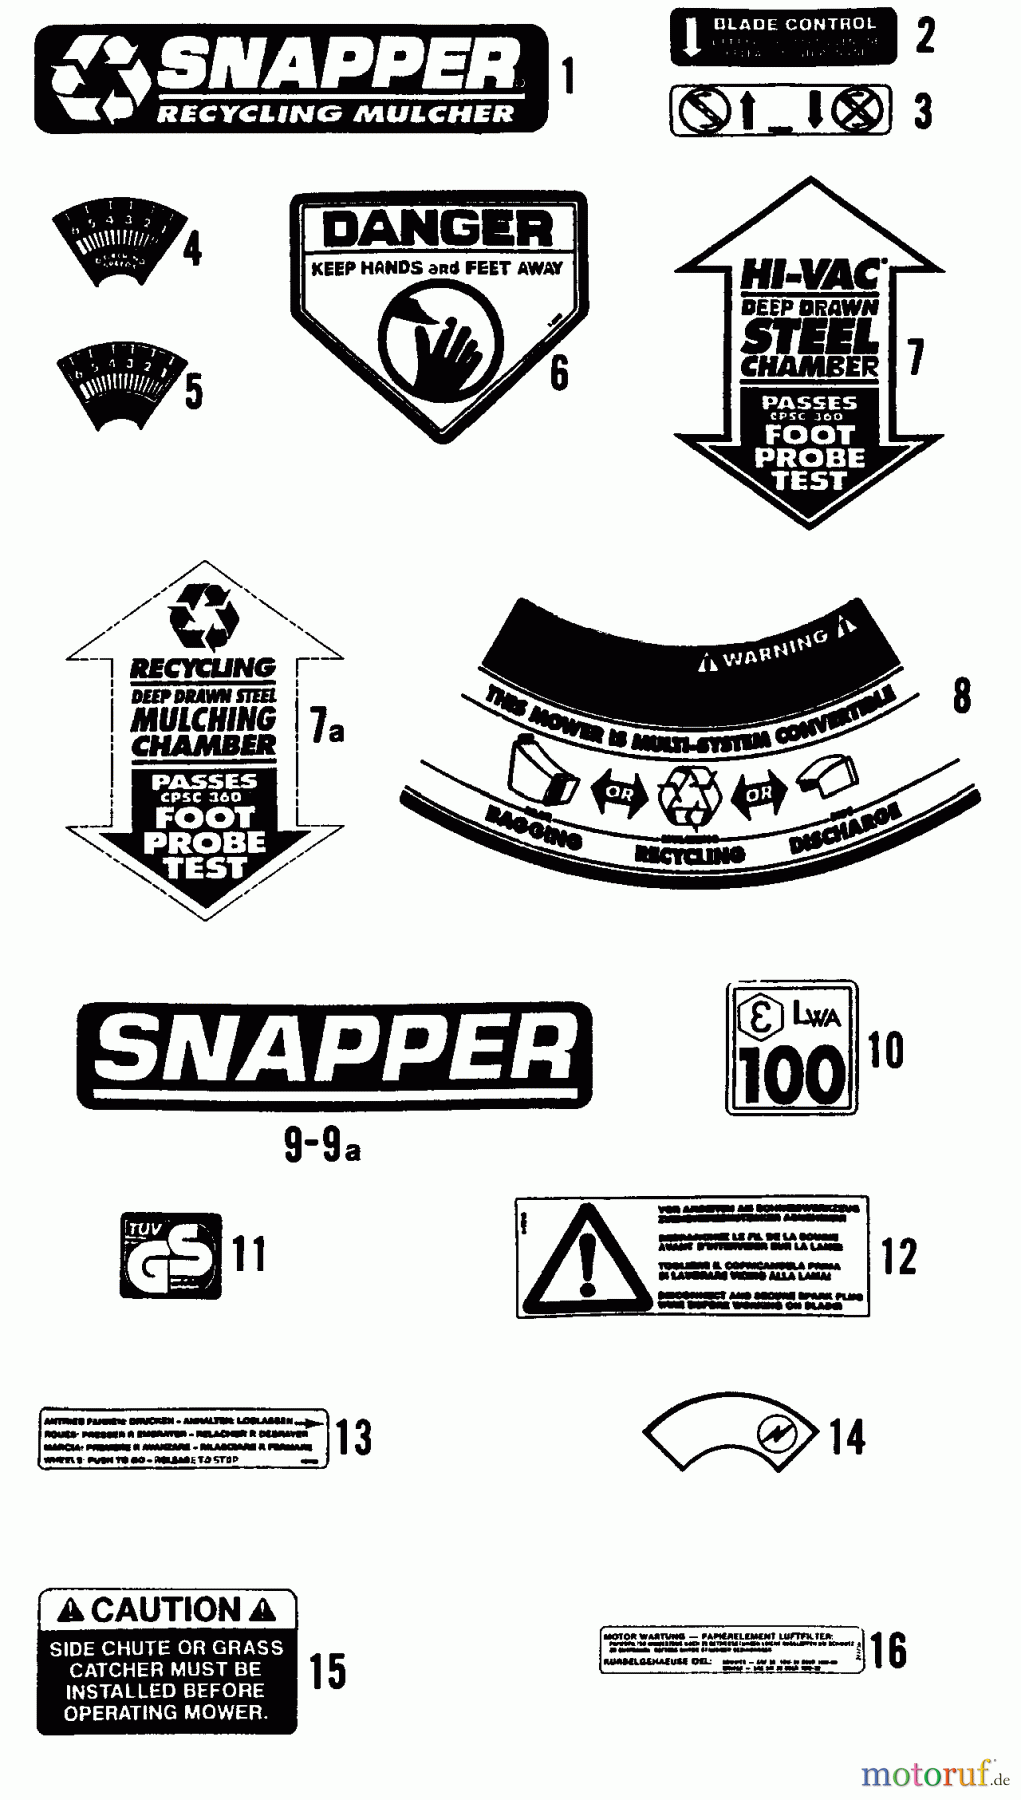  Snapper Rasenmäher D21509B - Snapper 21